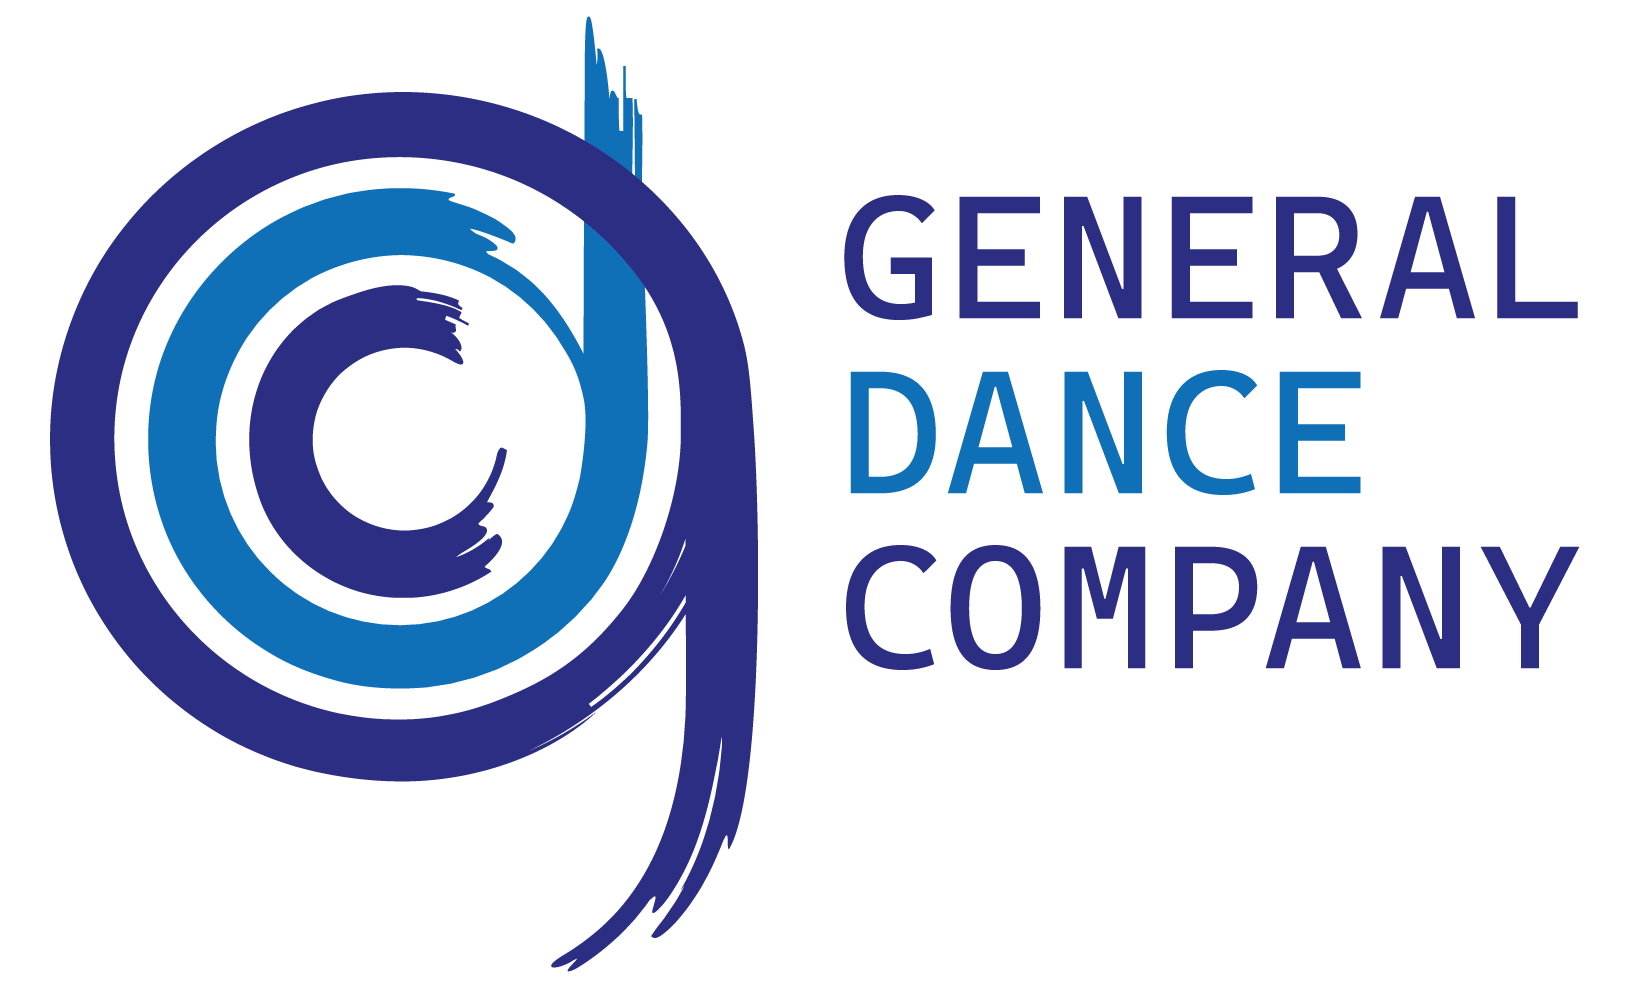 GENERAL DANCE COMPANY